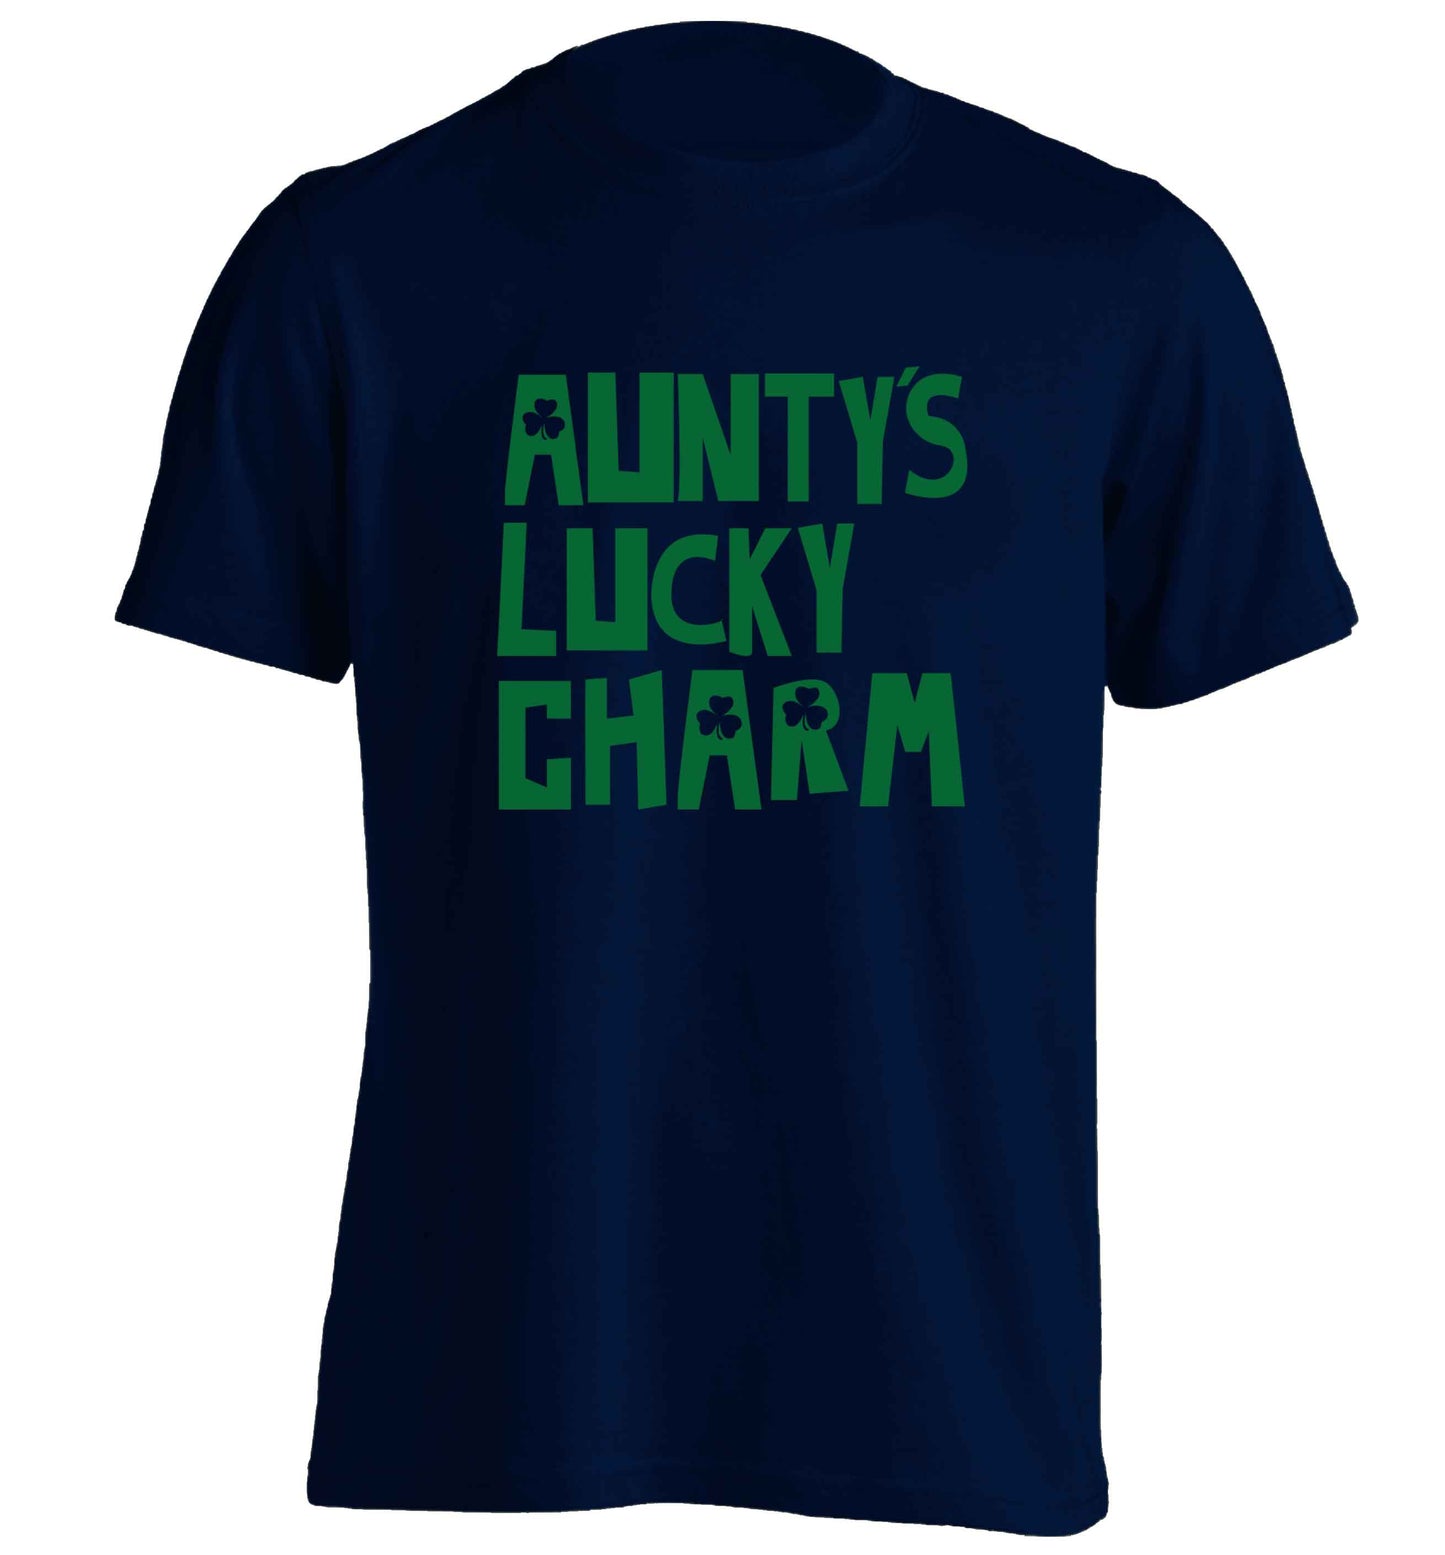 Aunty's lucky charm adults unisex navy Tshirt 2XL